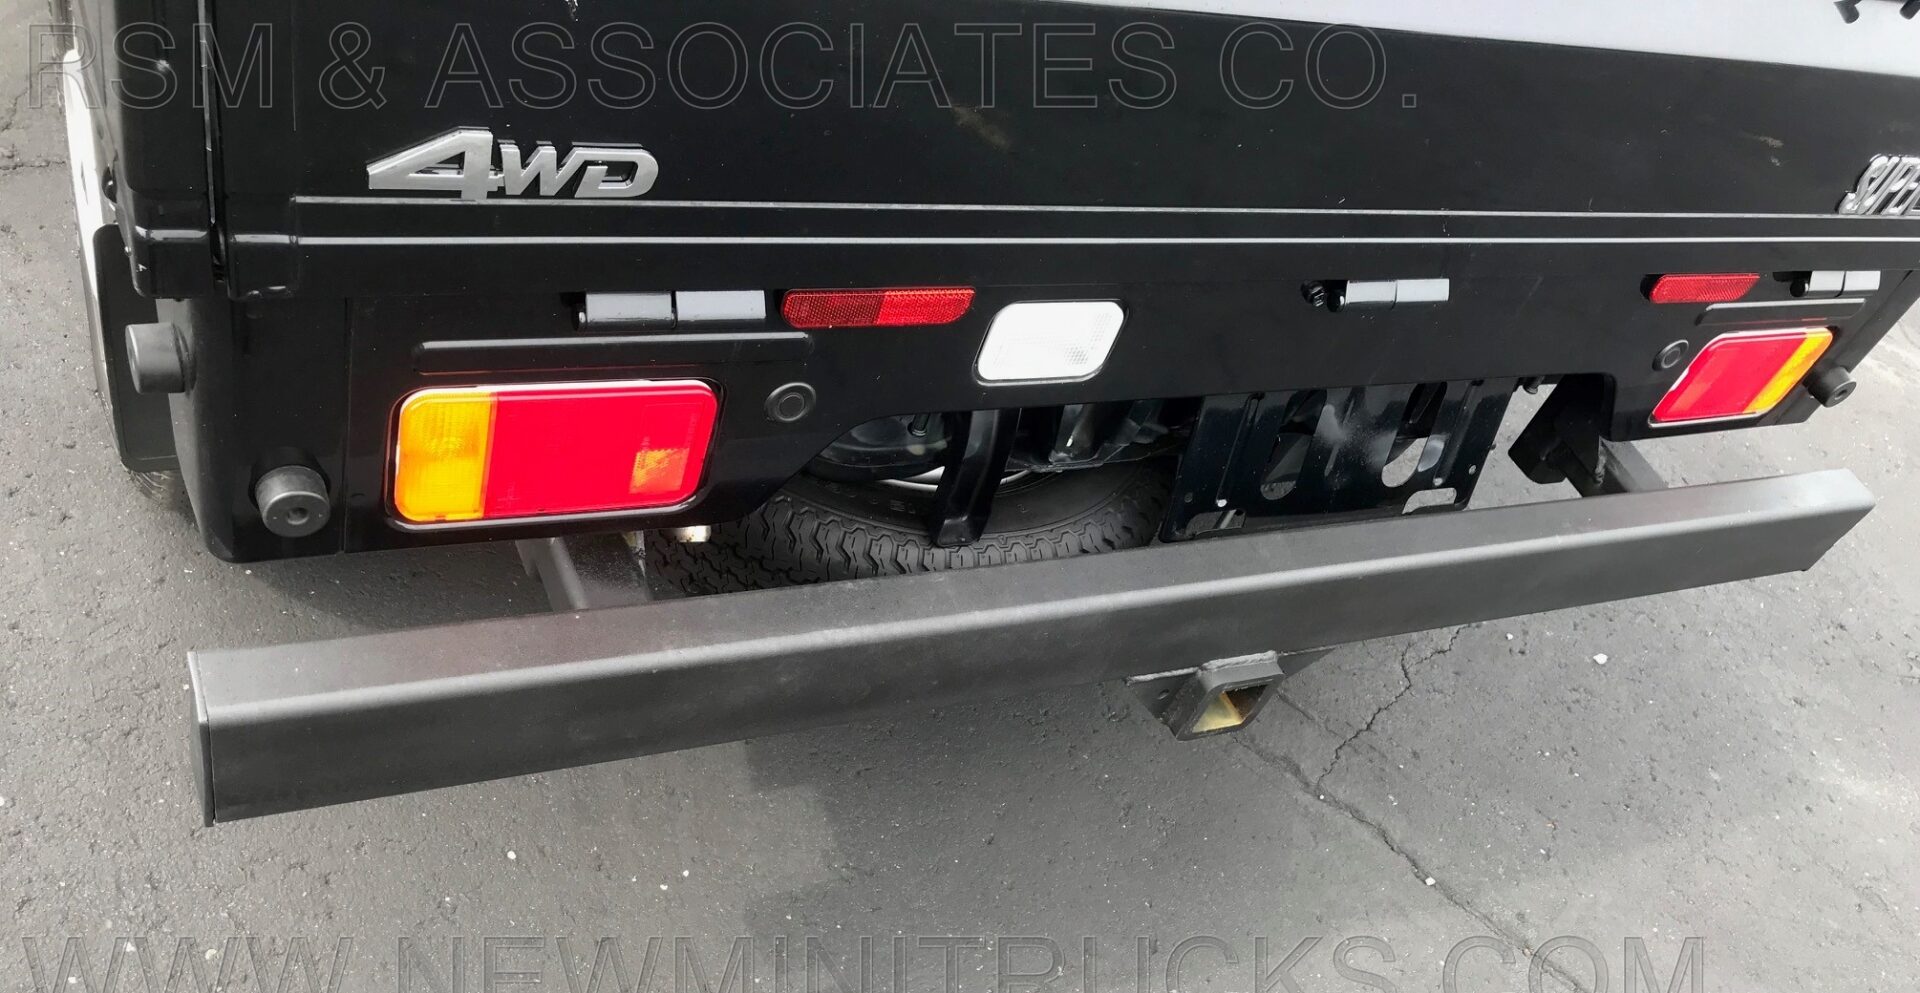 back bumper of a black truck